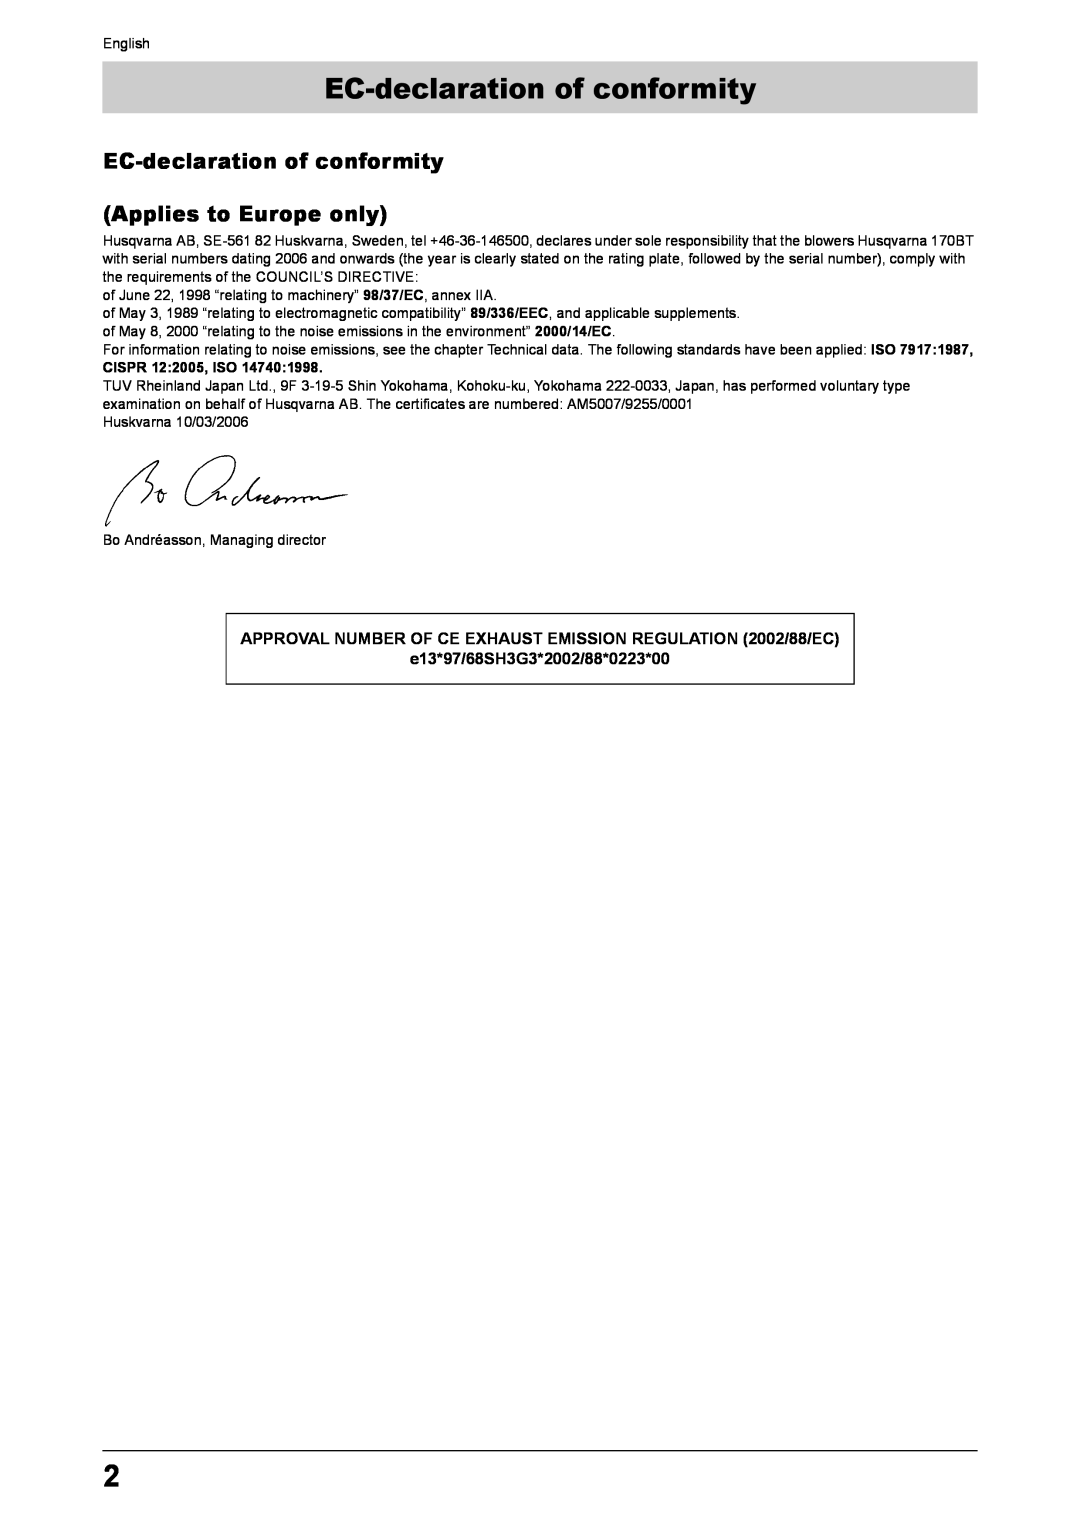 Husqvarna 170BT manual EC-declaration of conformity Applies to Europe only, e13*97/68SH3G3*2002/88*0223*00 